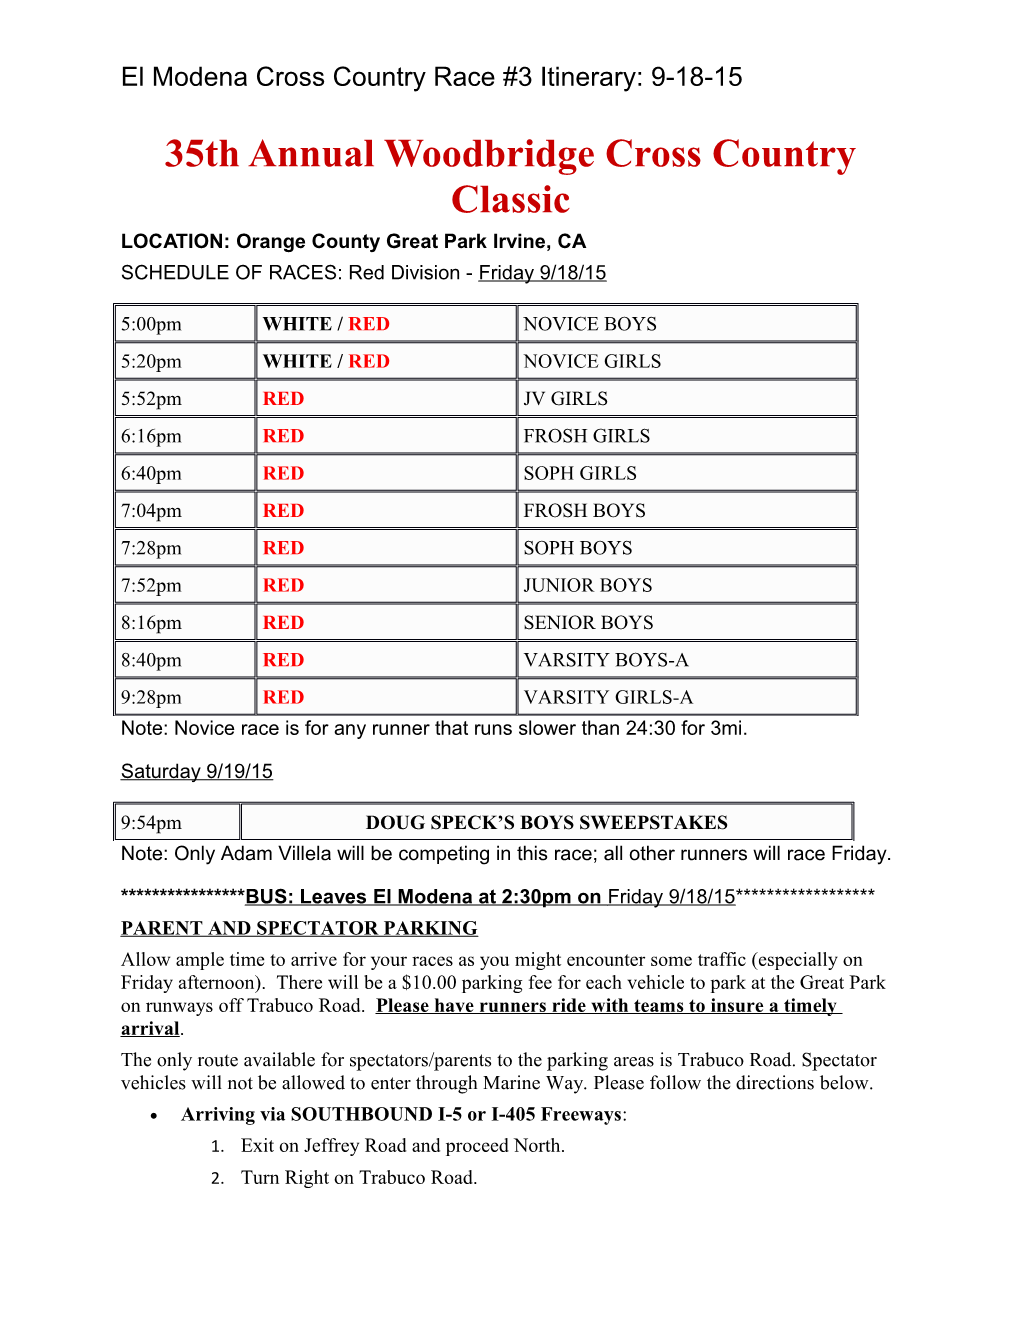 35Th Annual Woodbridge Cross Country Classic